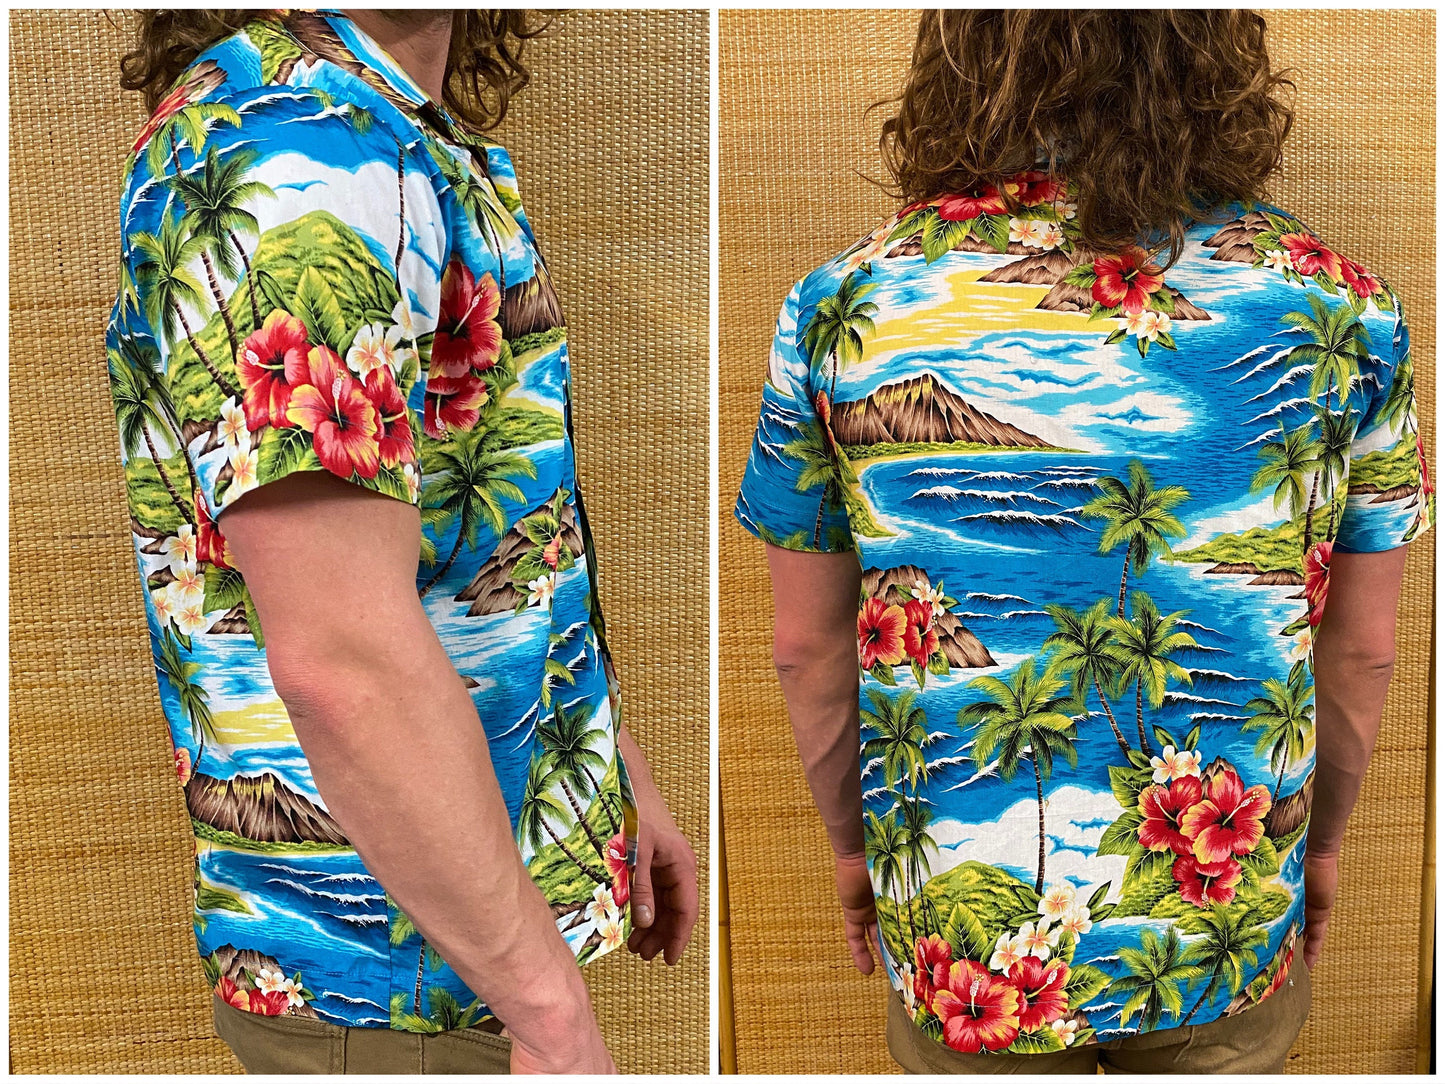 Men's Hawaiian Shirt